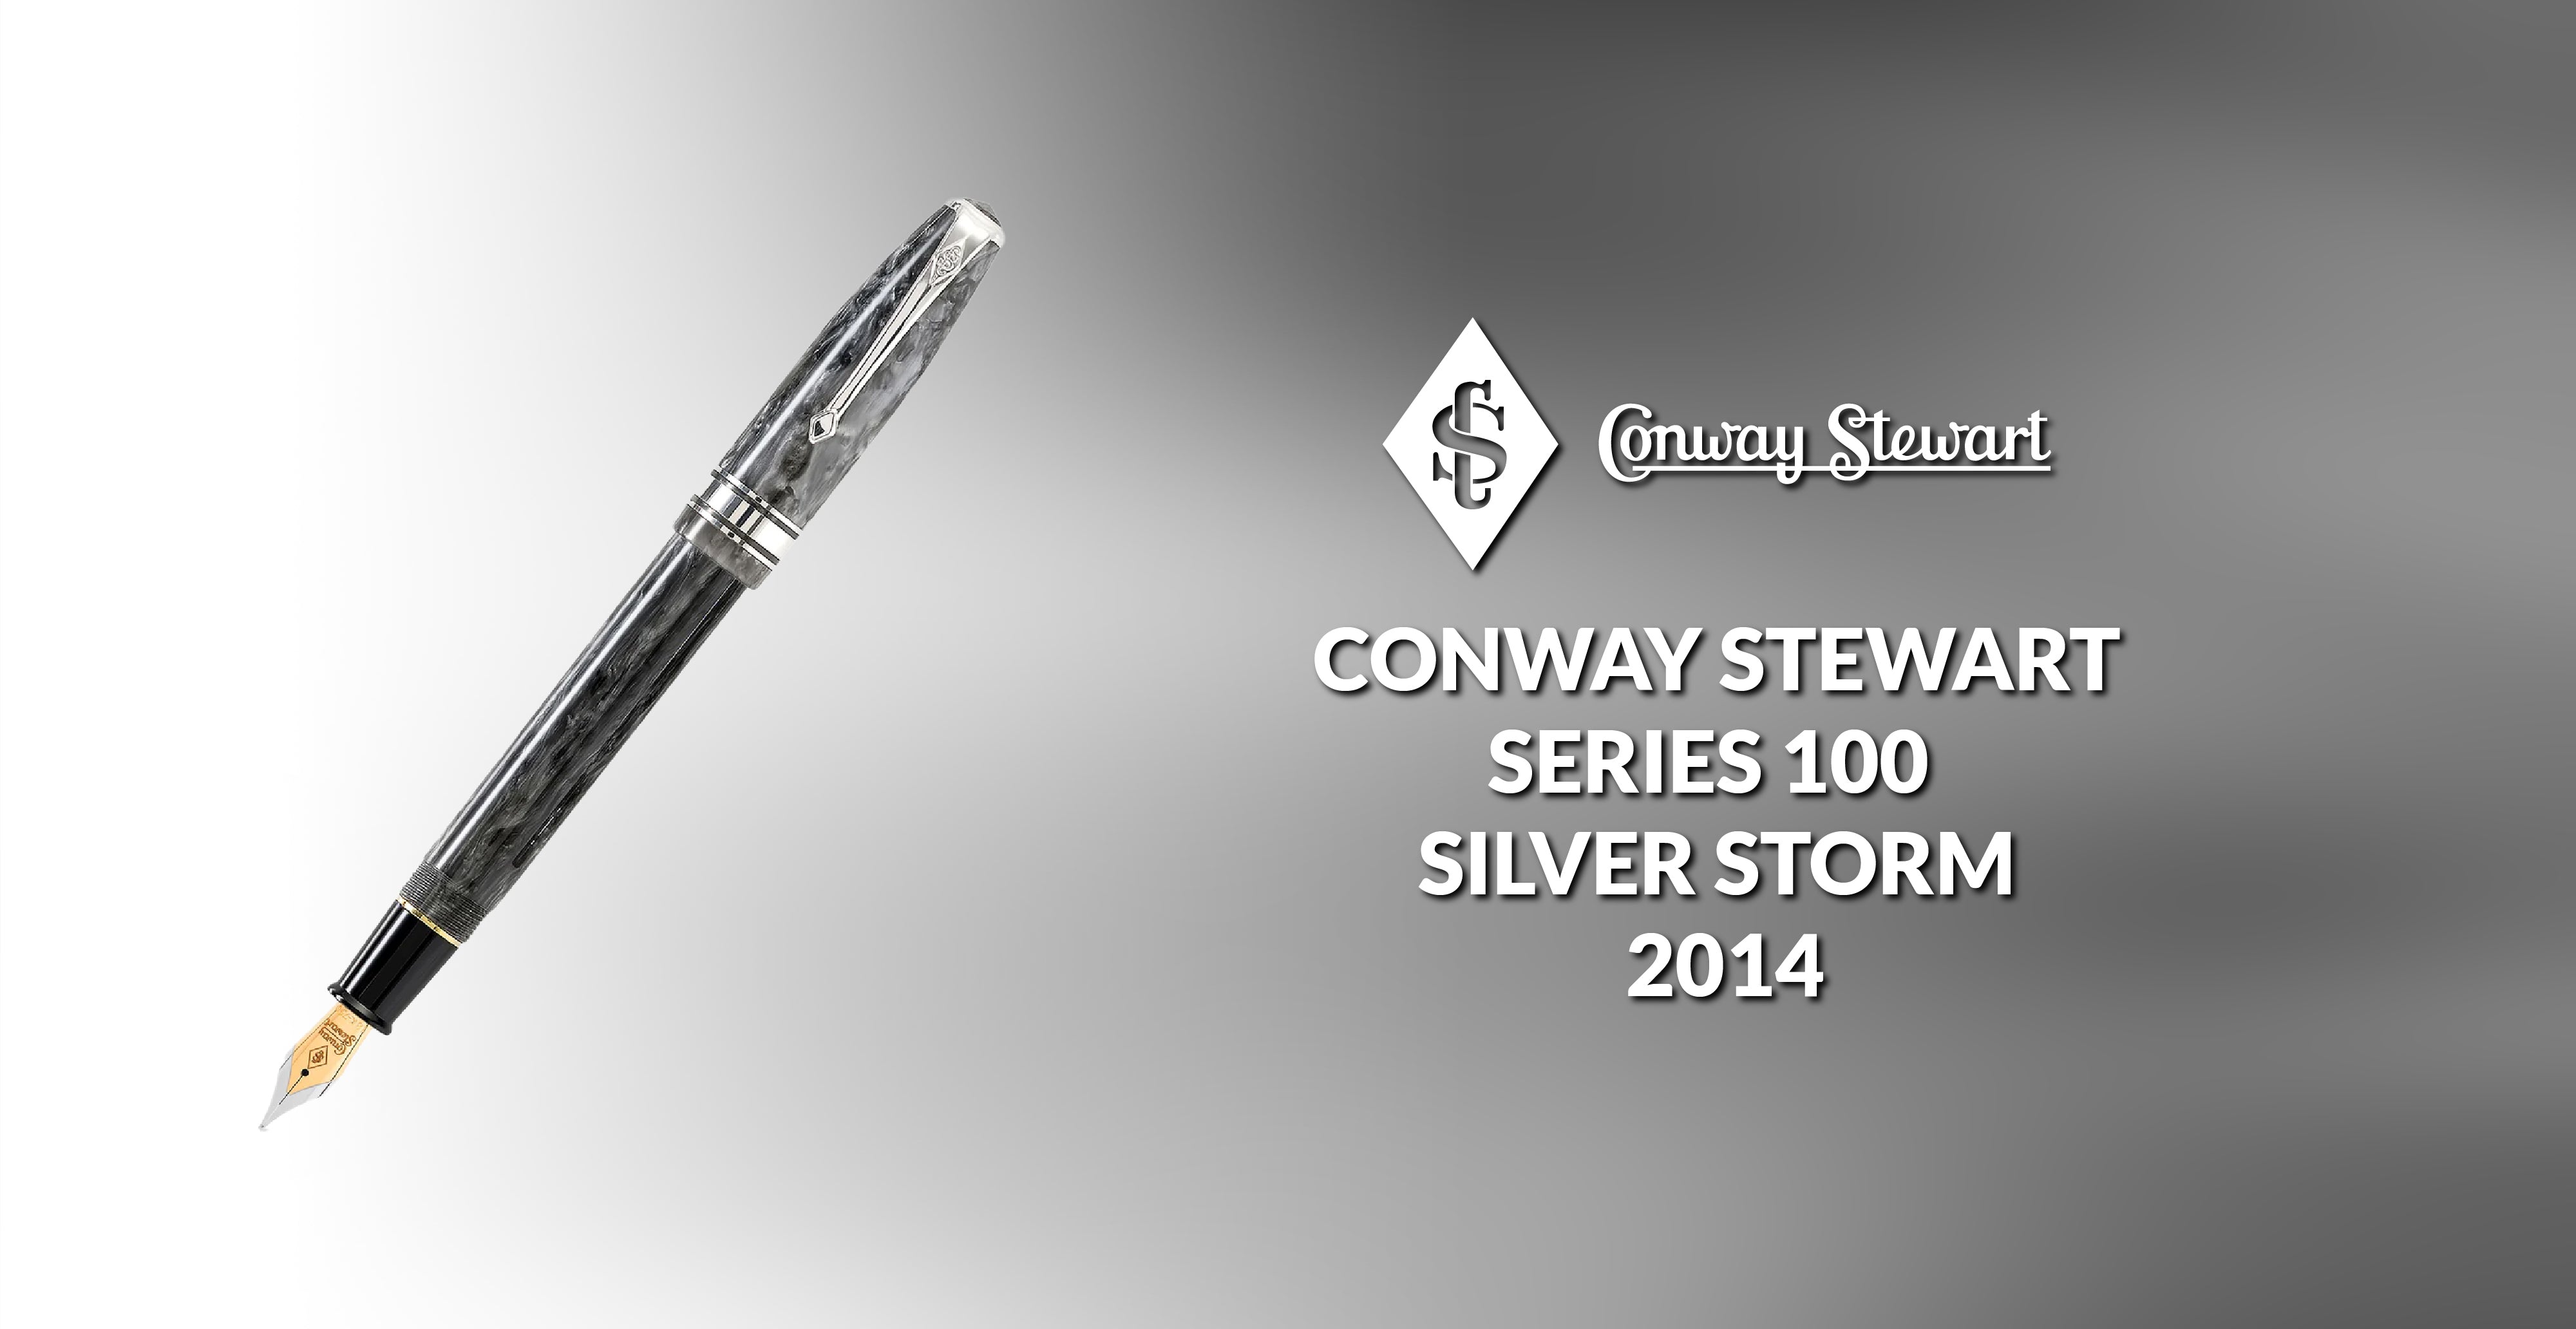 Conway Stewart Series 100 Silver Storm, 2014